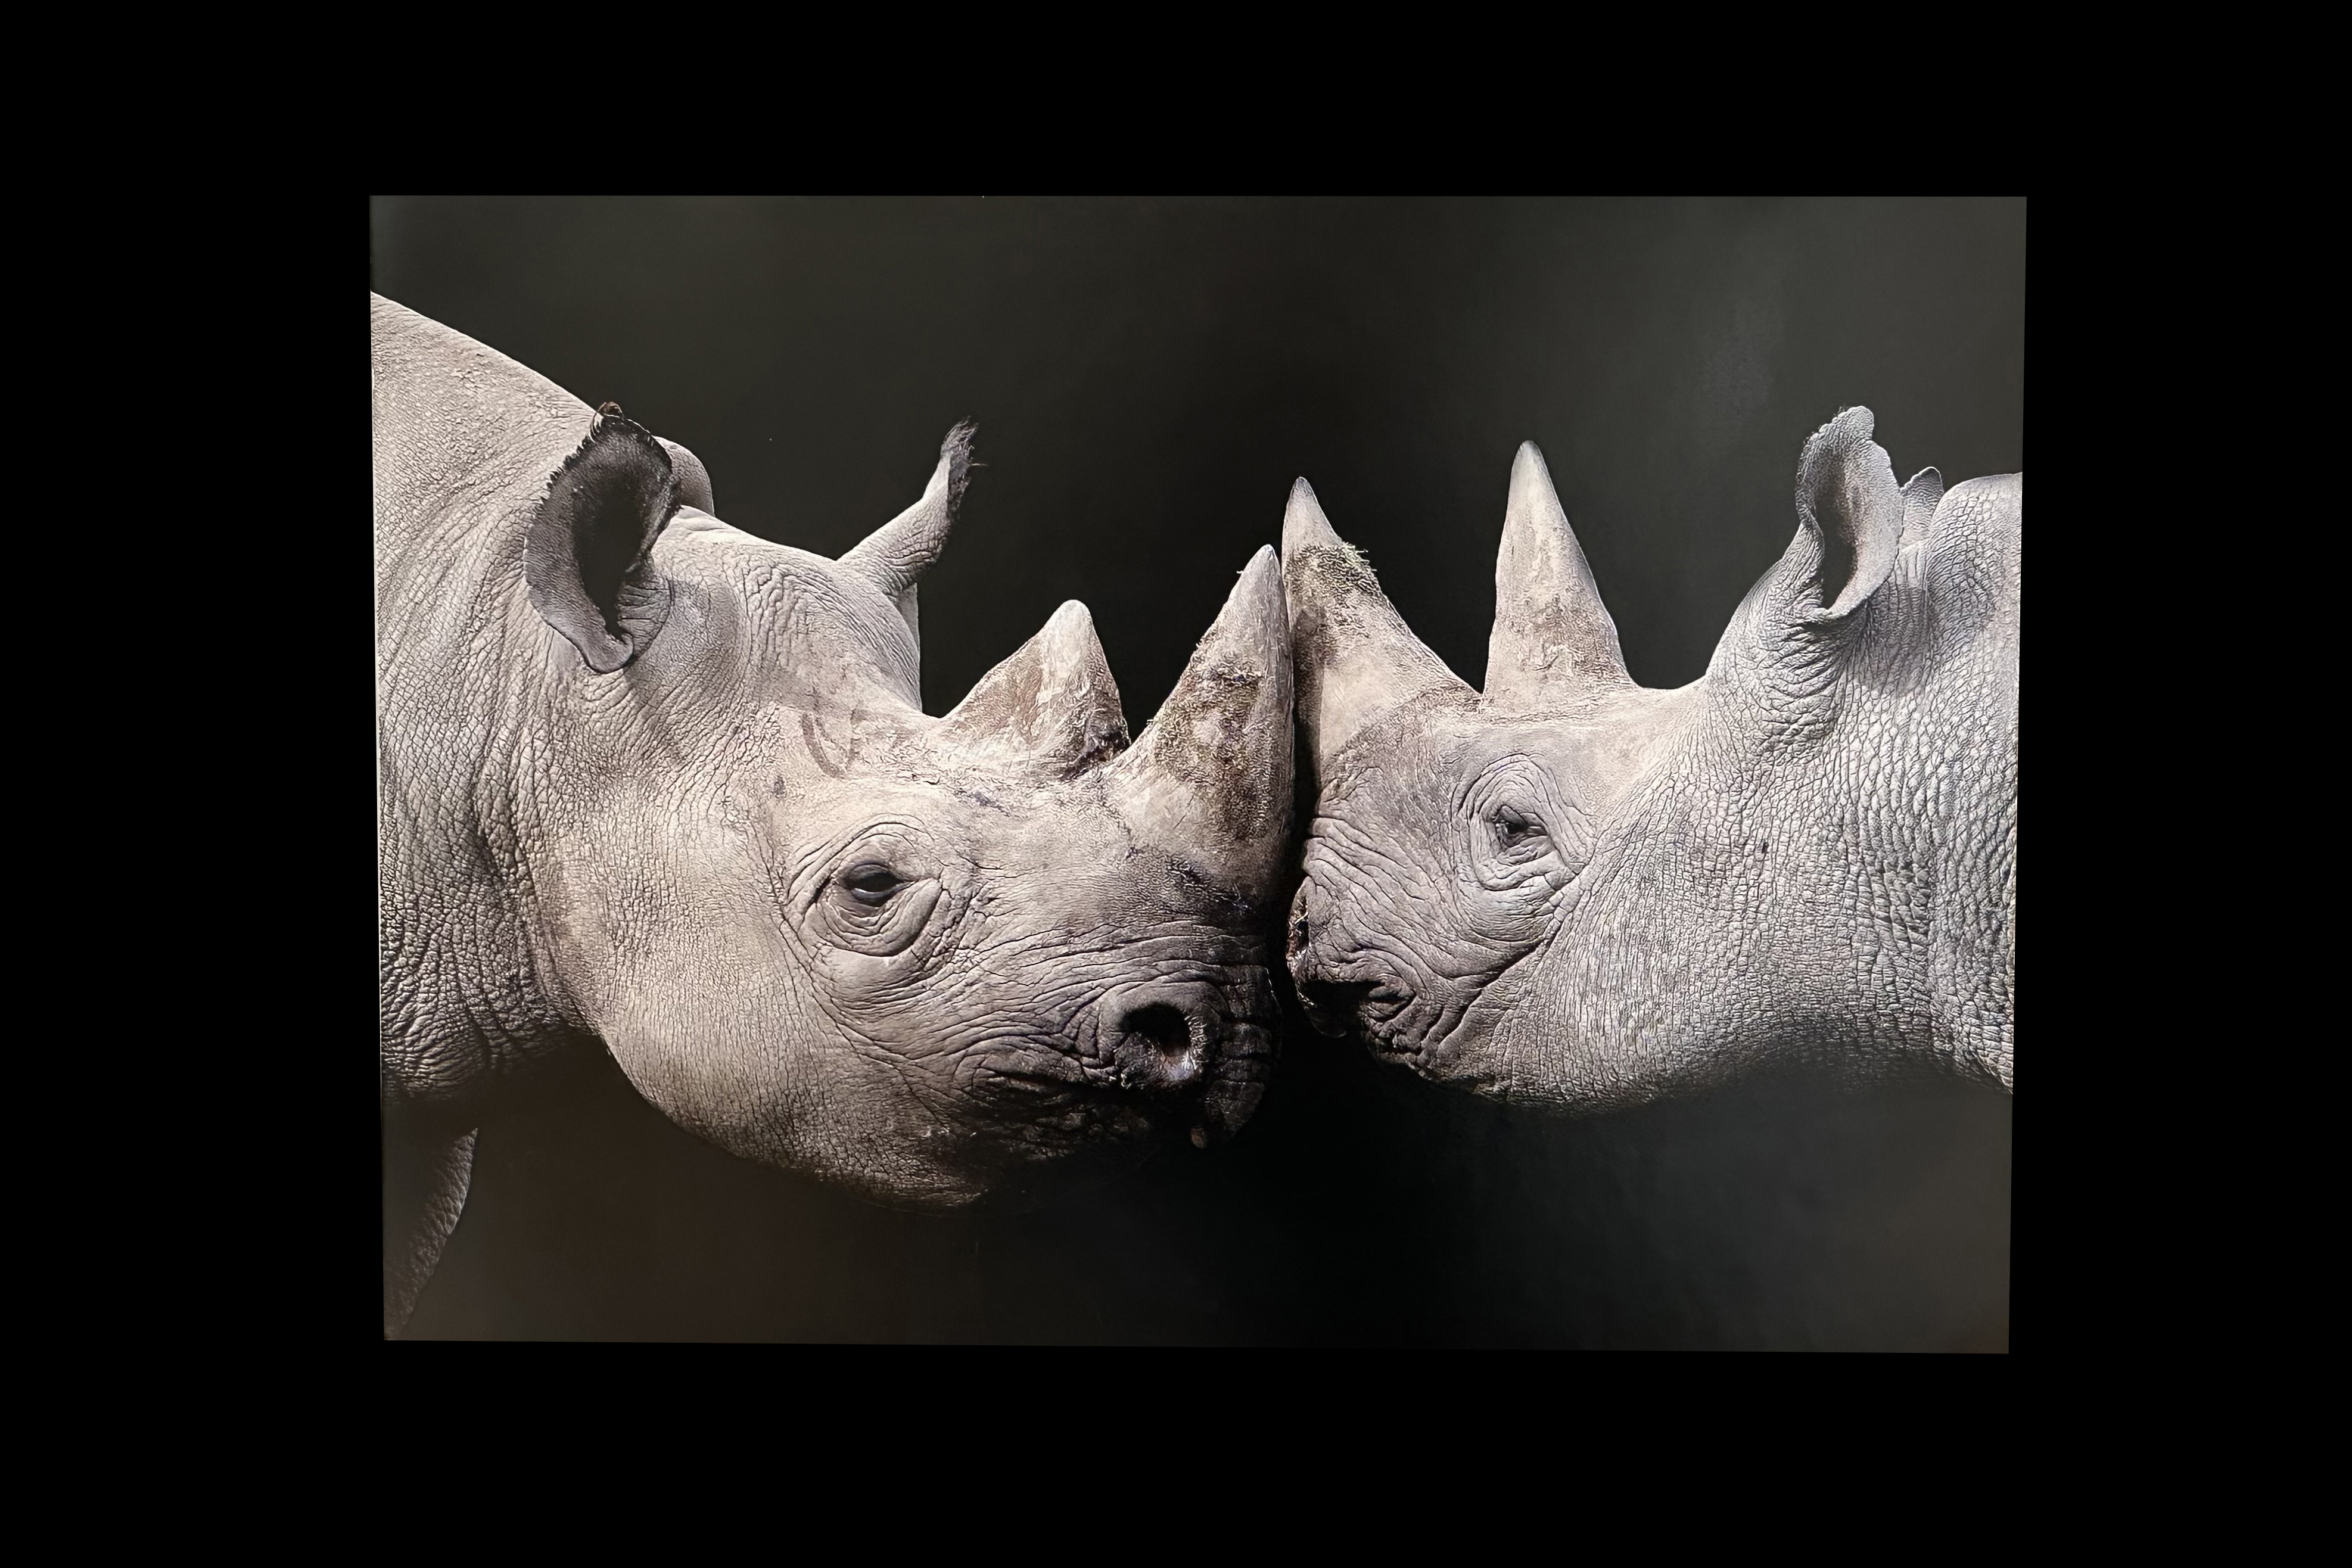 Photograph of Black Rhinos - Etosha (Namibia) by Michael Sheridan